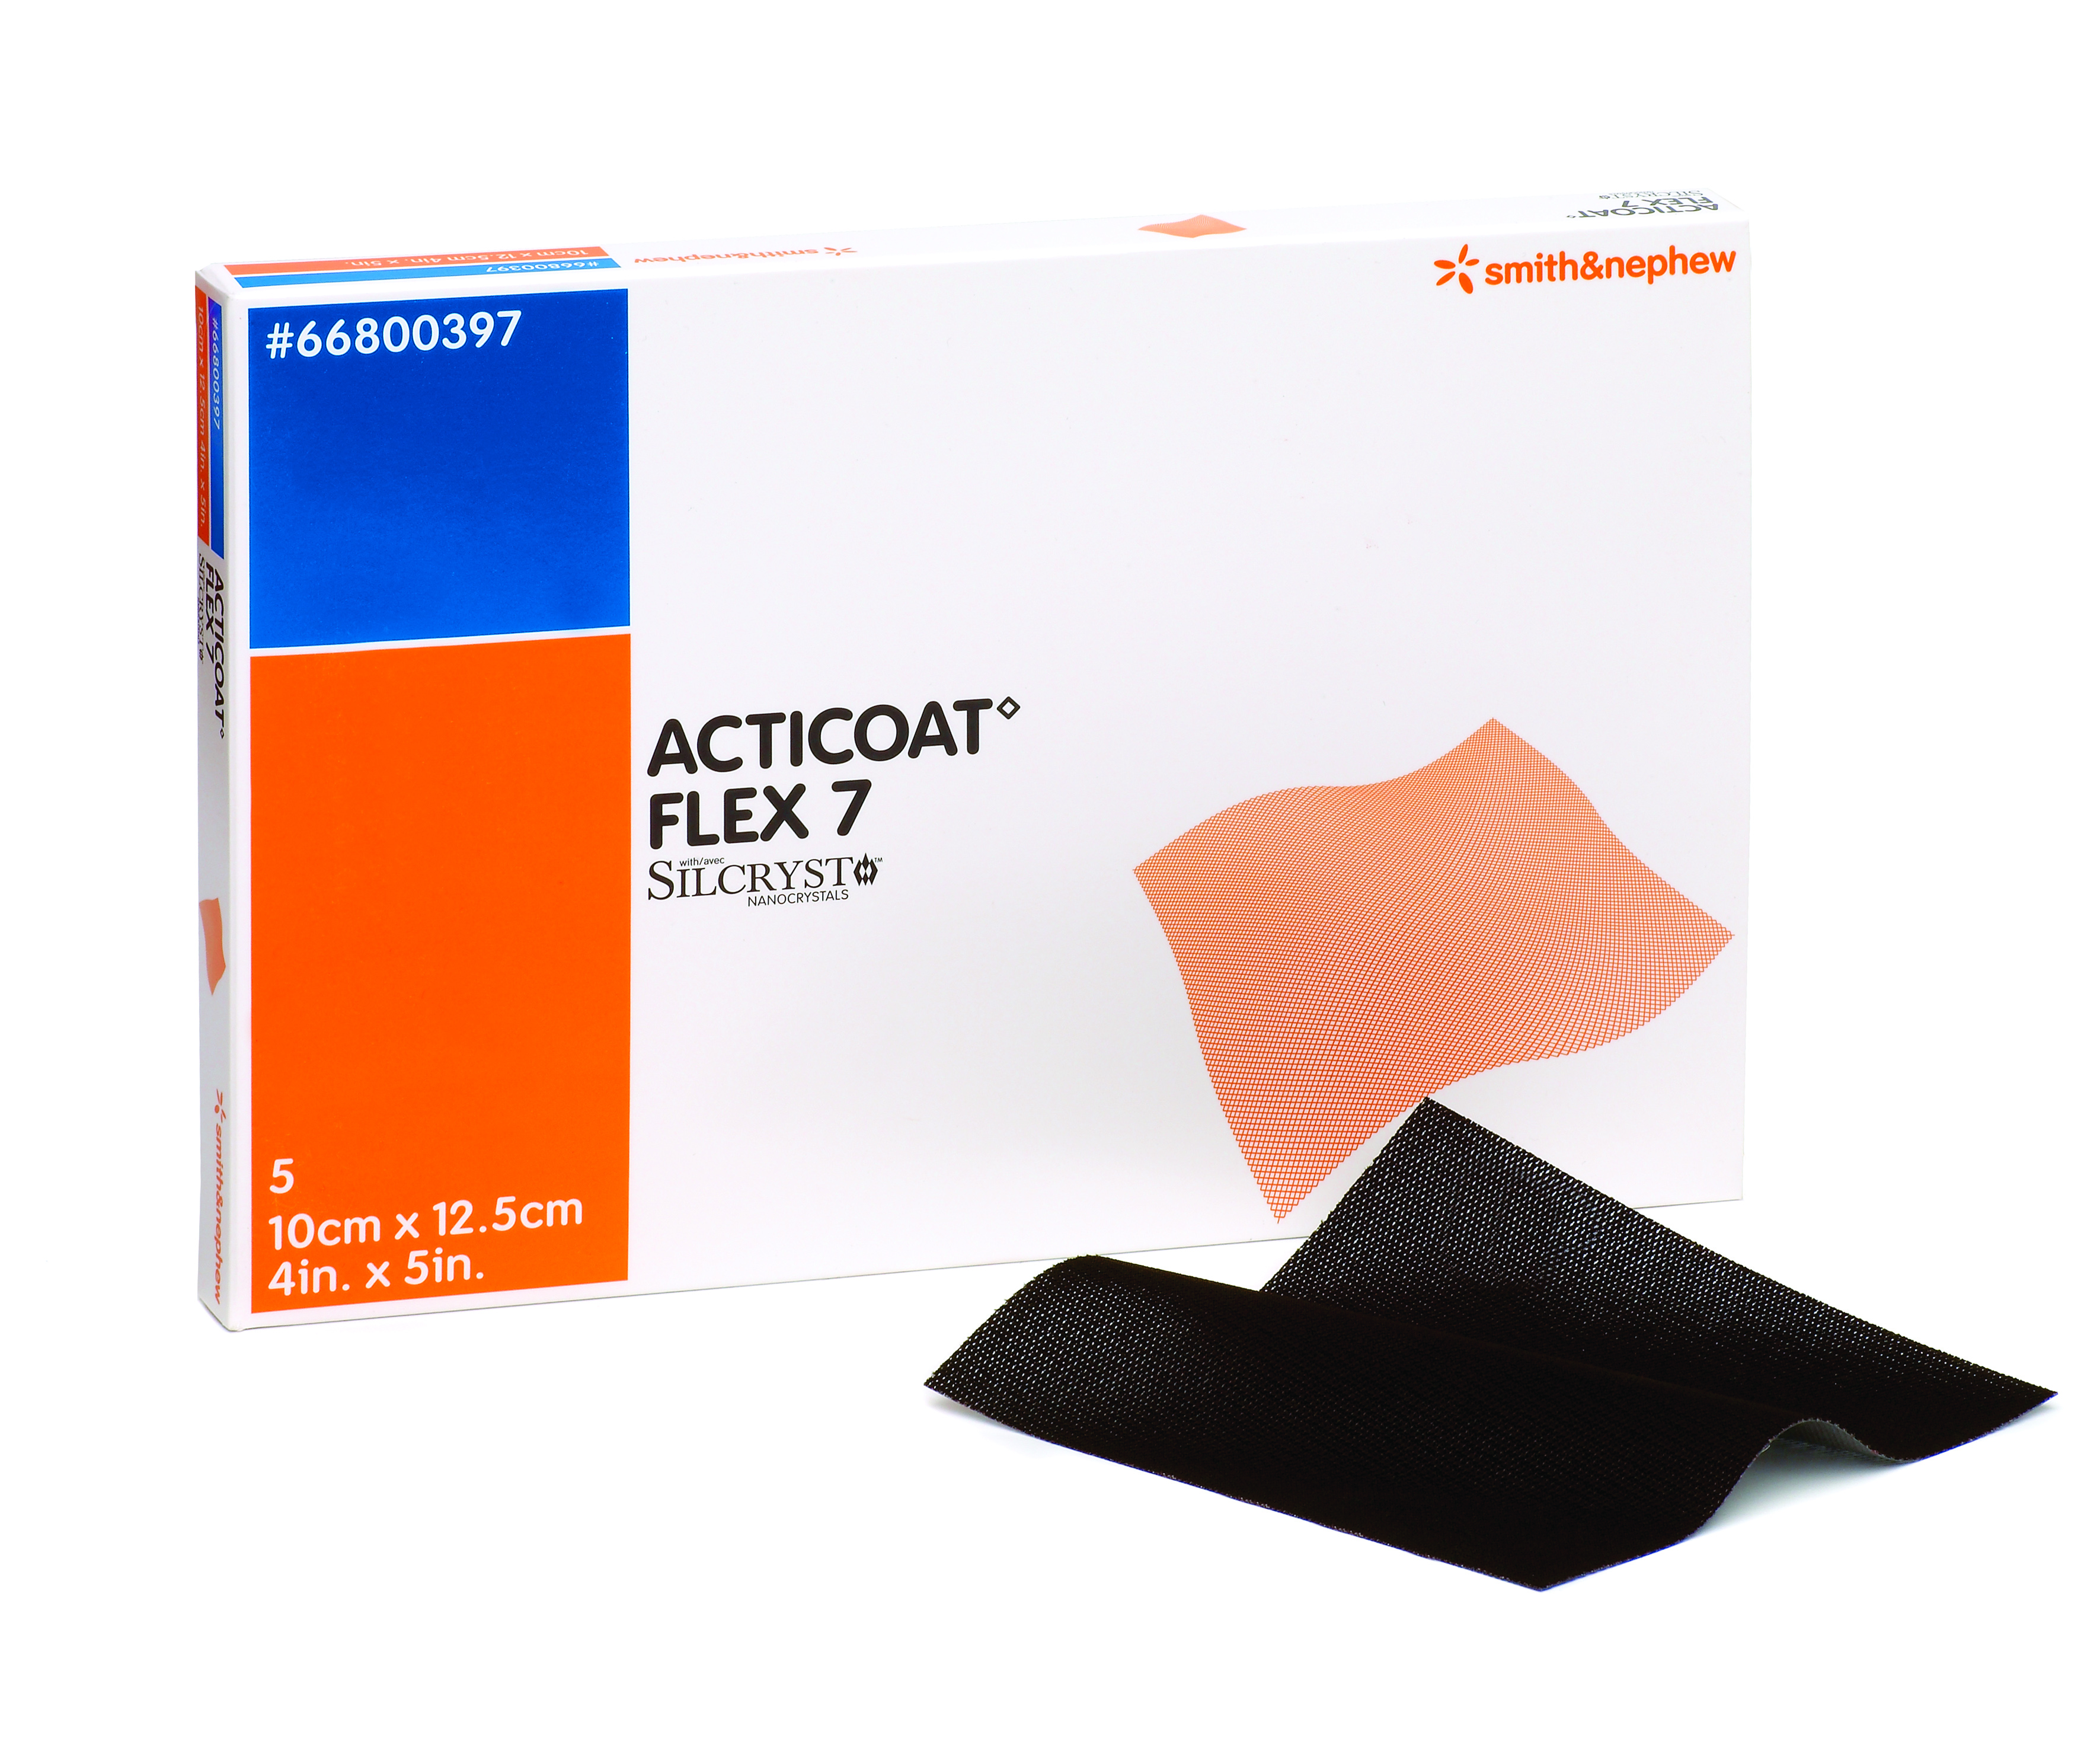 Acticoat Flex 7 Antimicrobial Dressing 10cm x 12.5cm image 1